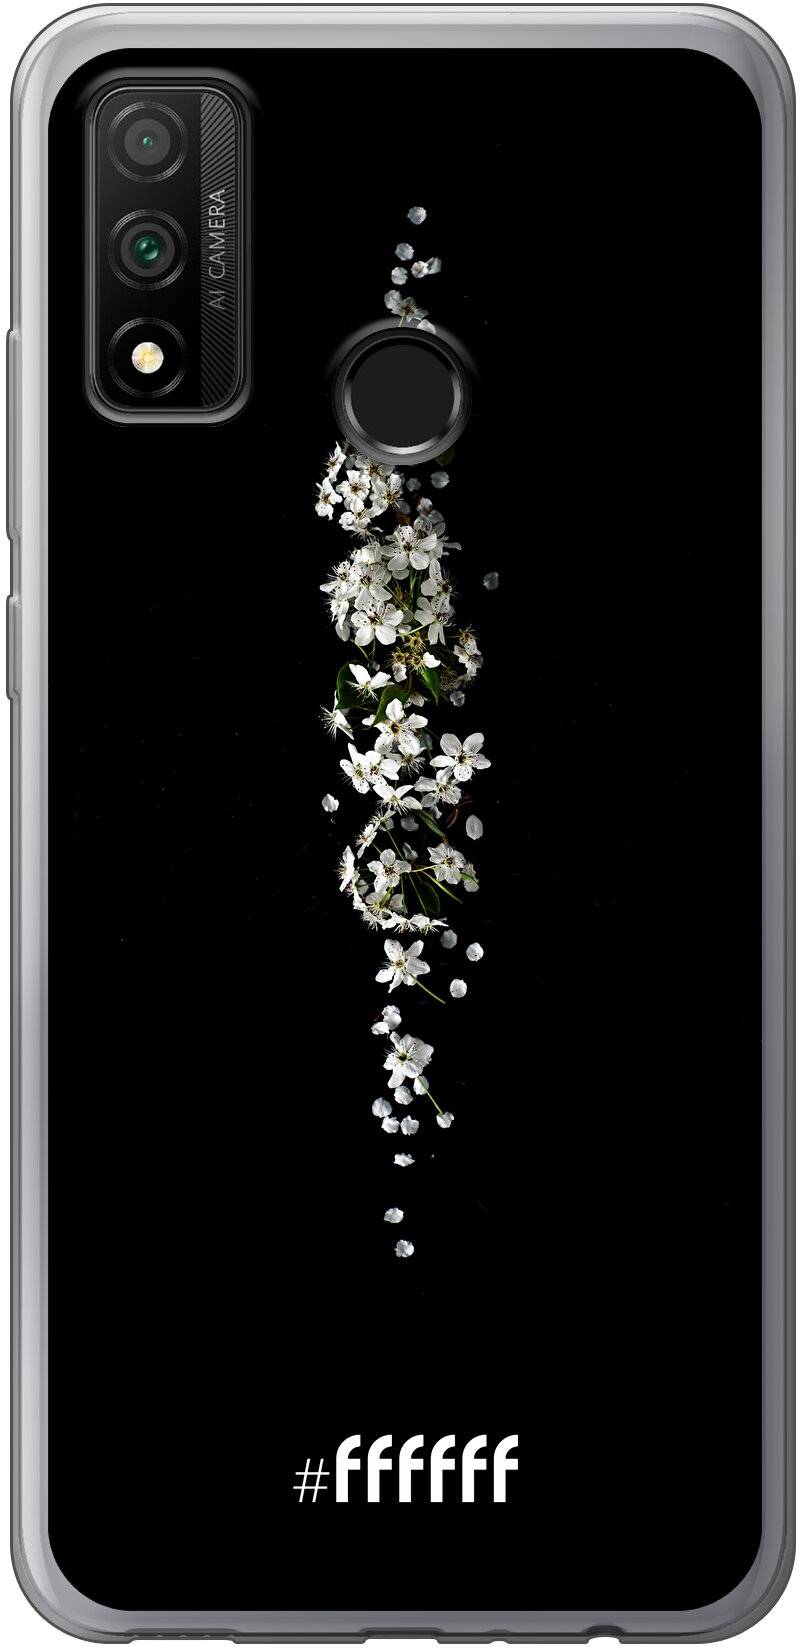 White flowers in the dark P Smart (2020)